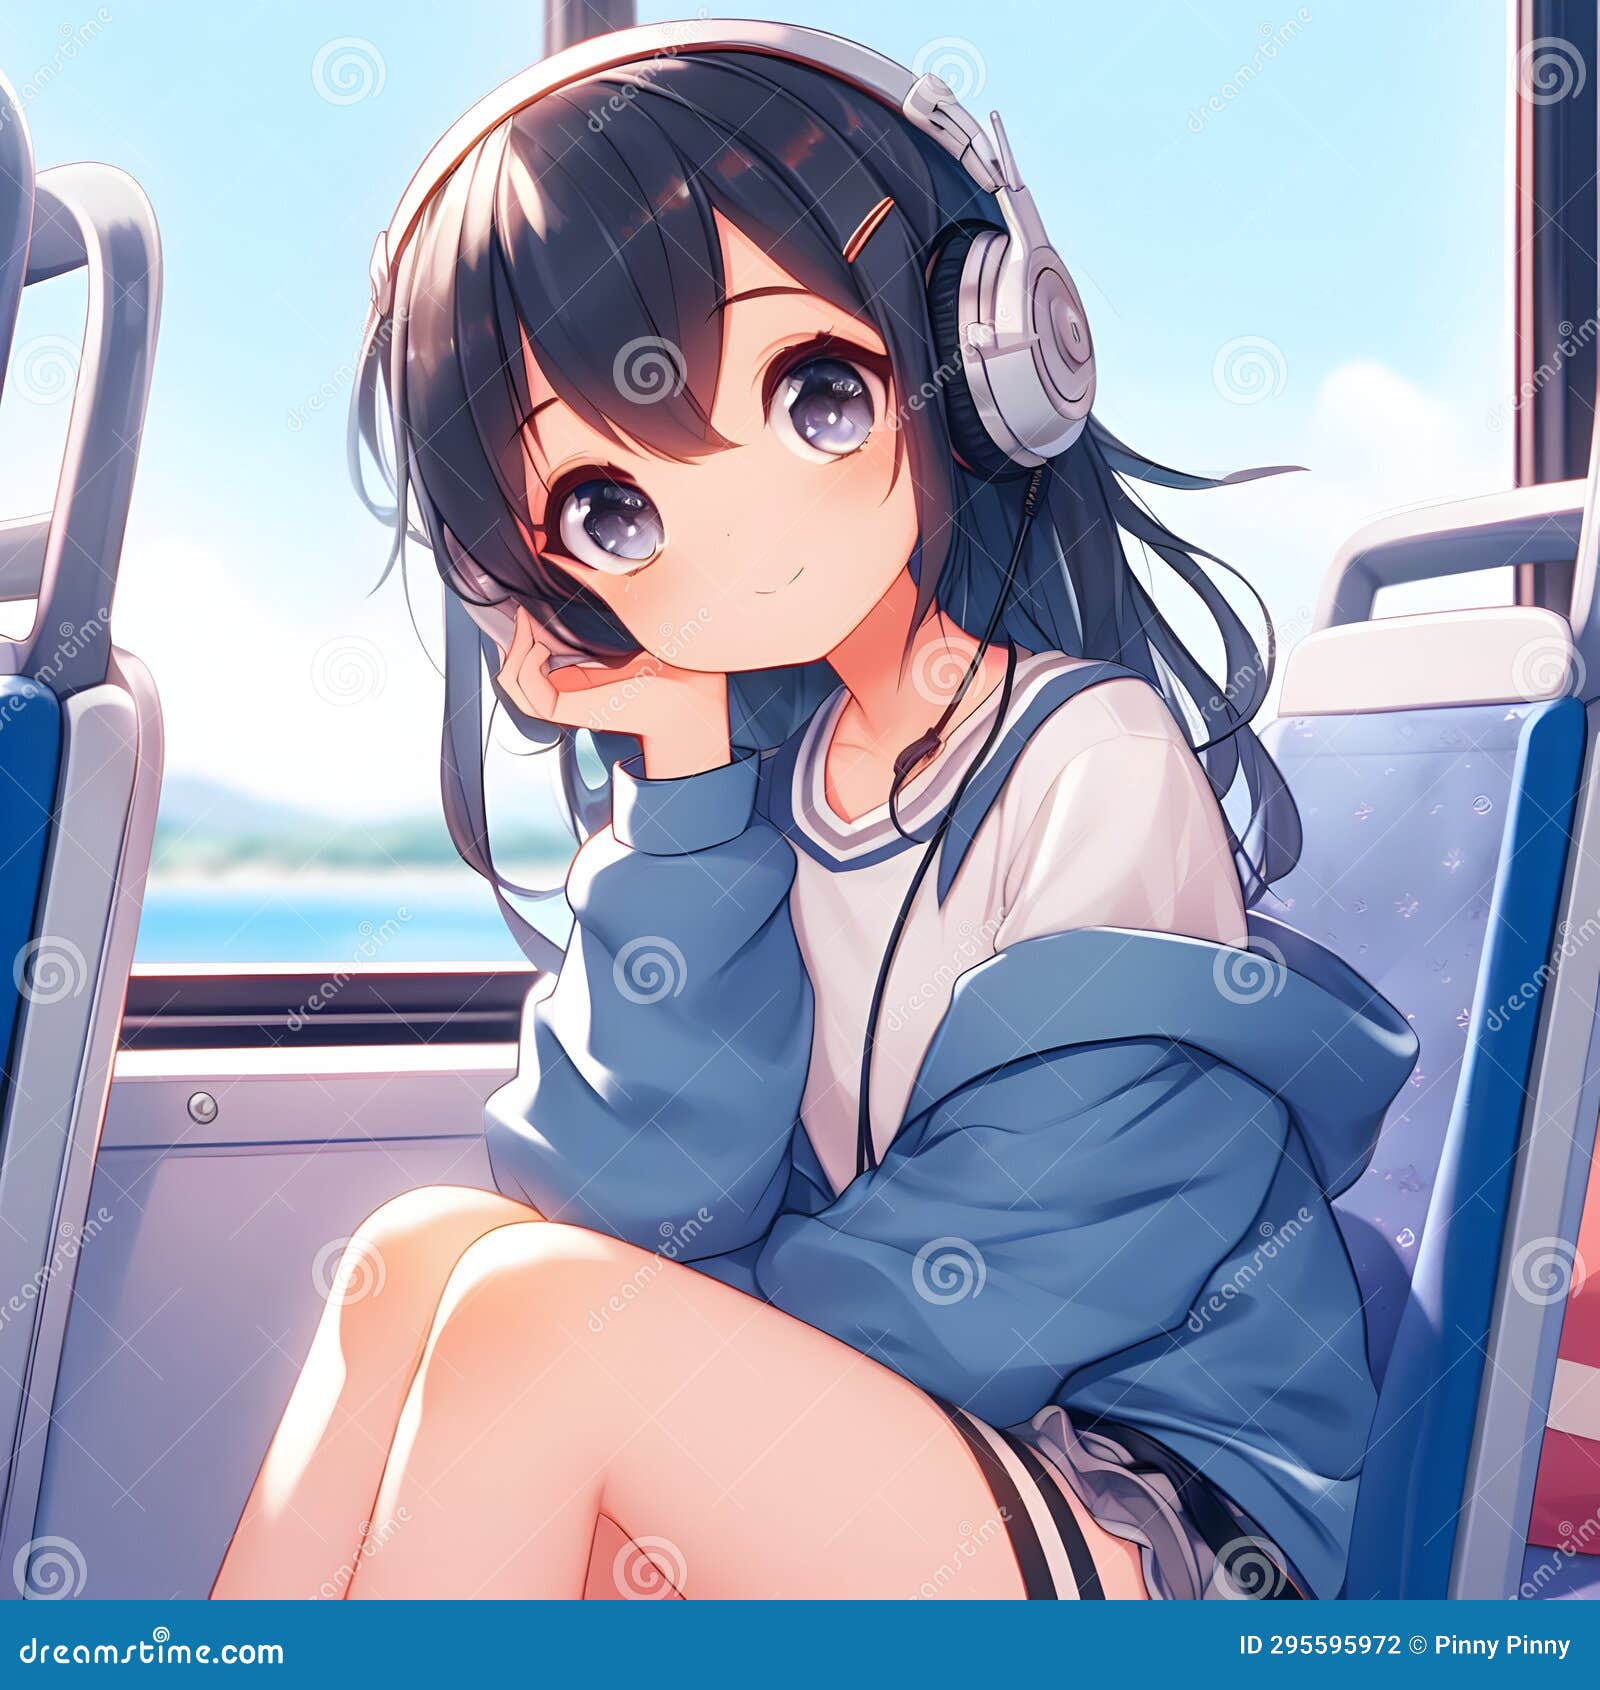 MikeHattsu Anime Journeys: Love Live Sunshine - School Bus Stop